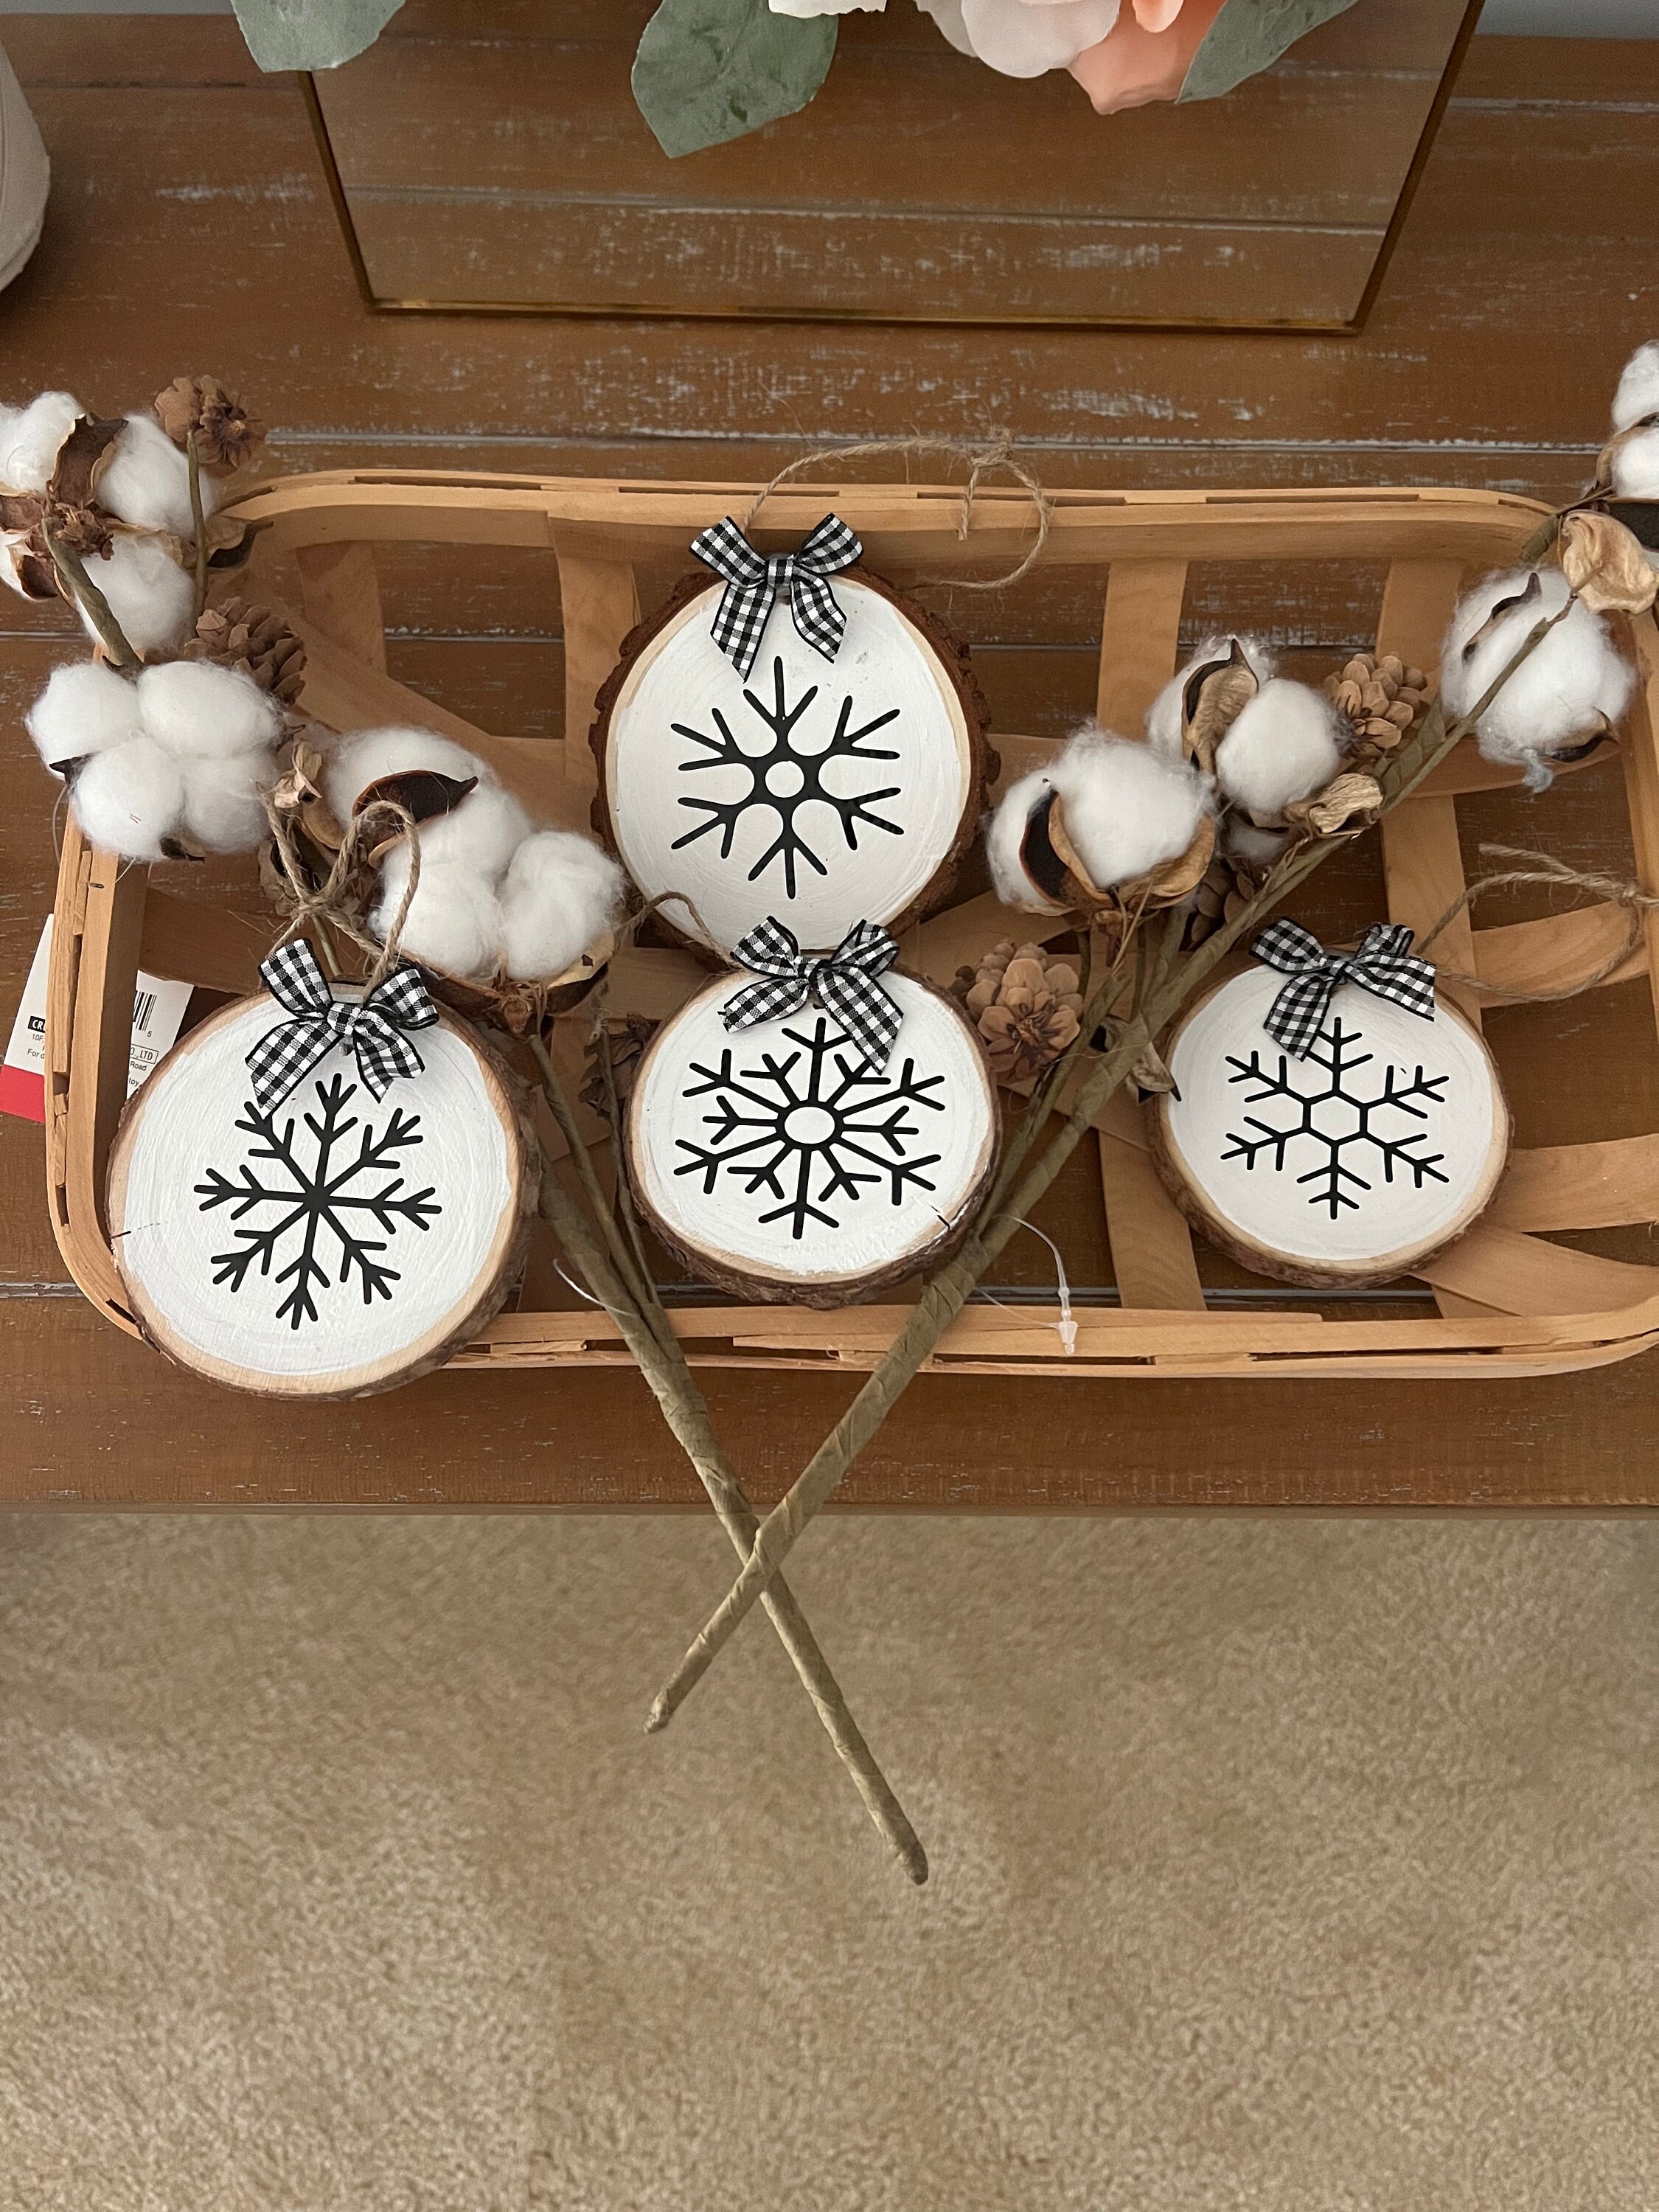 Wooden Snowflake Ornament Cherry Maple Ash – Dandelions